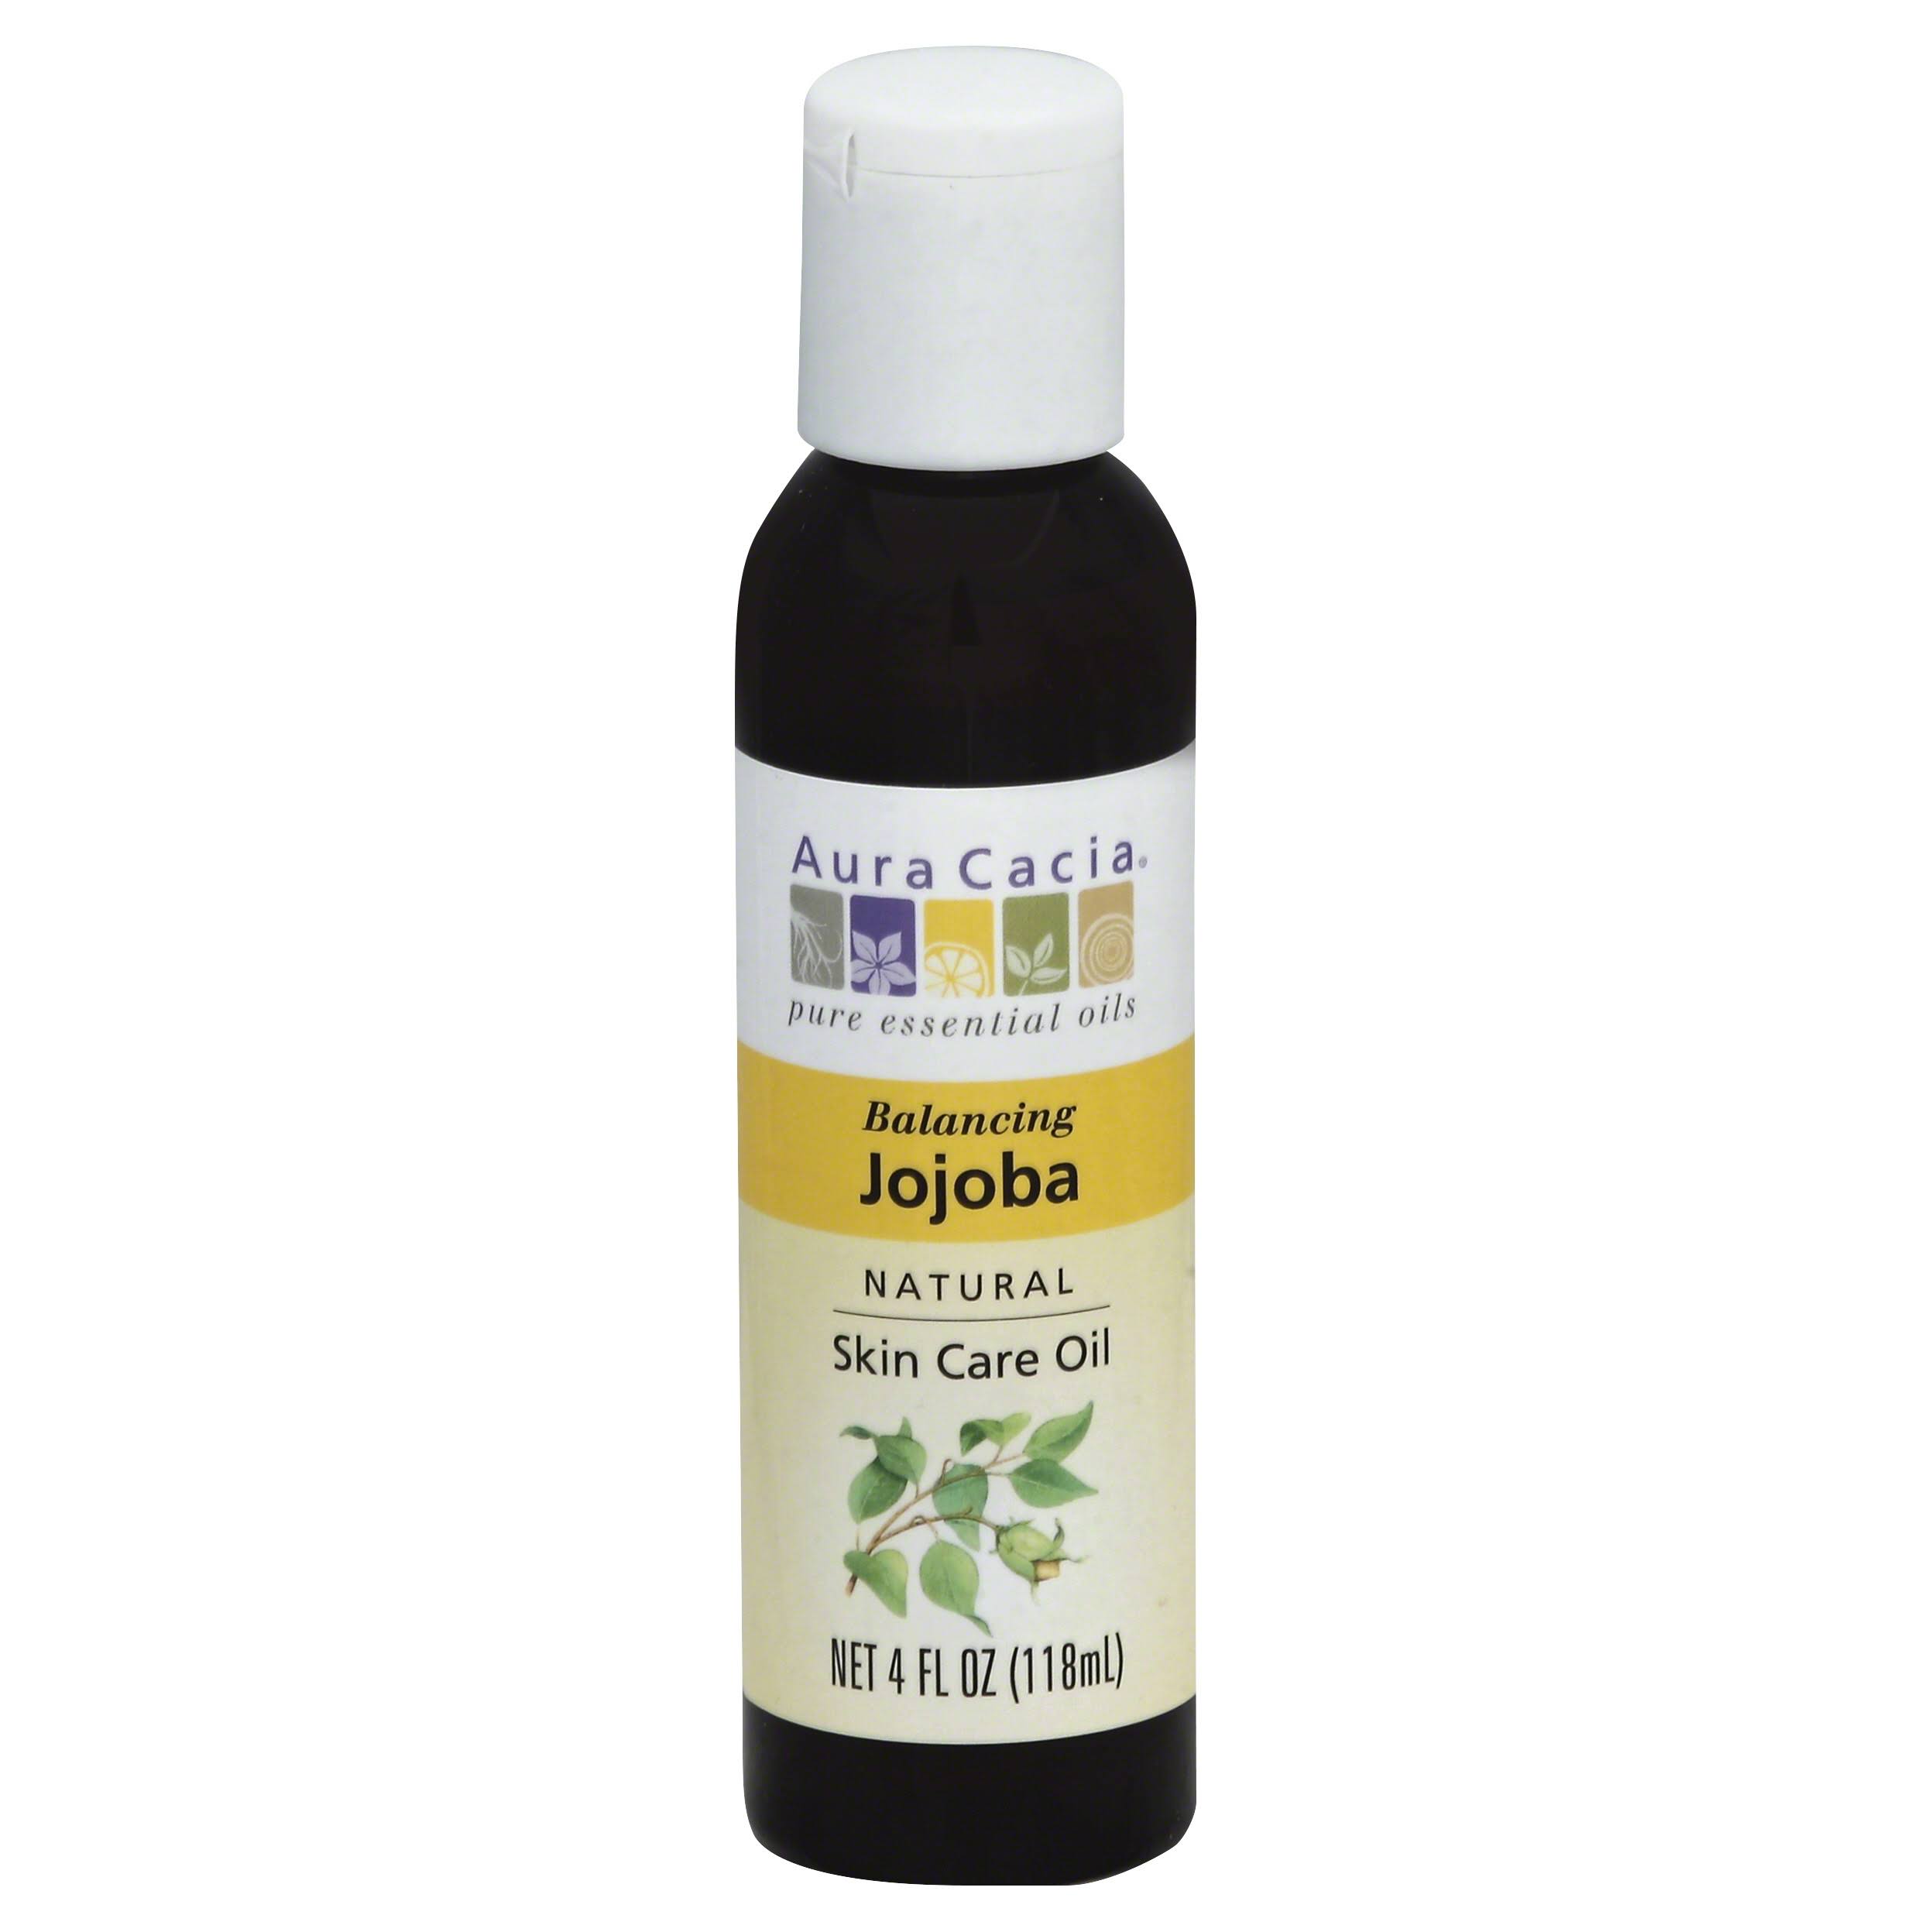 Aura Cacia Natural Skin Care Oil - Jojoba, 4oz